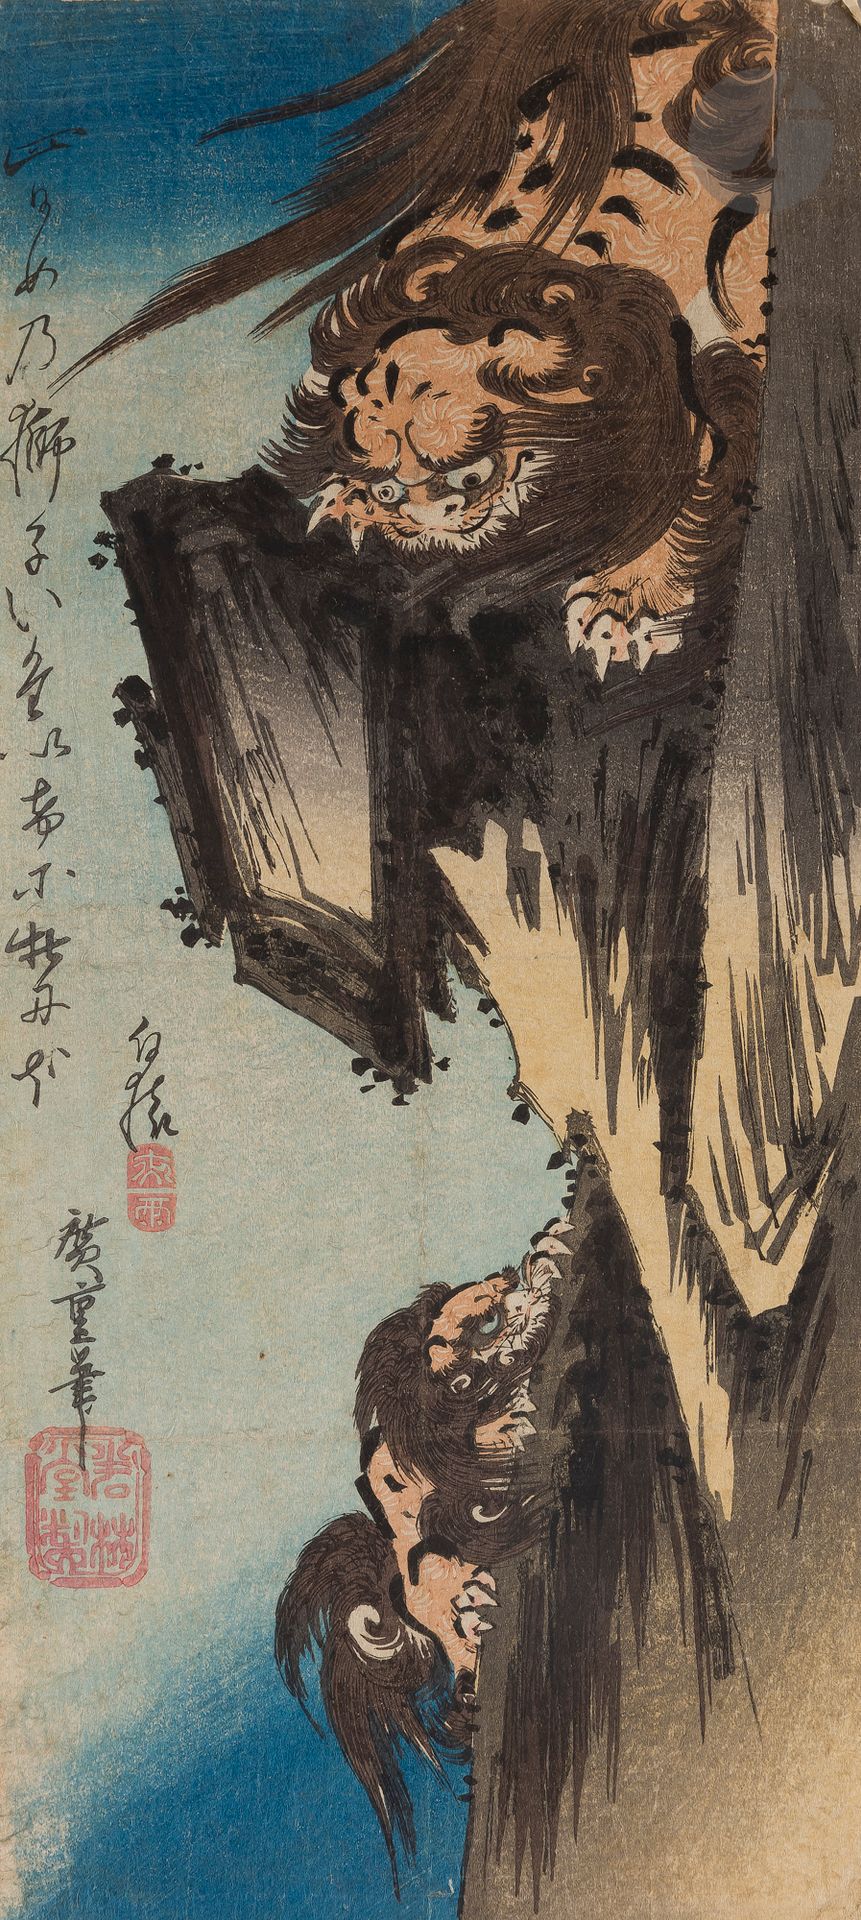 Null 宇川广重(1797-1858)，《试探性地教育小狮子》，《狮子の児落し》，日本，约。
1835/1839年西木绘
版画
，纸本水墨和多色，坦率地描绘了&hellip;